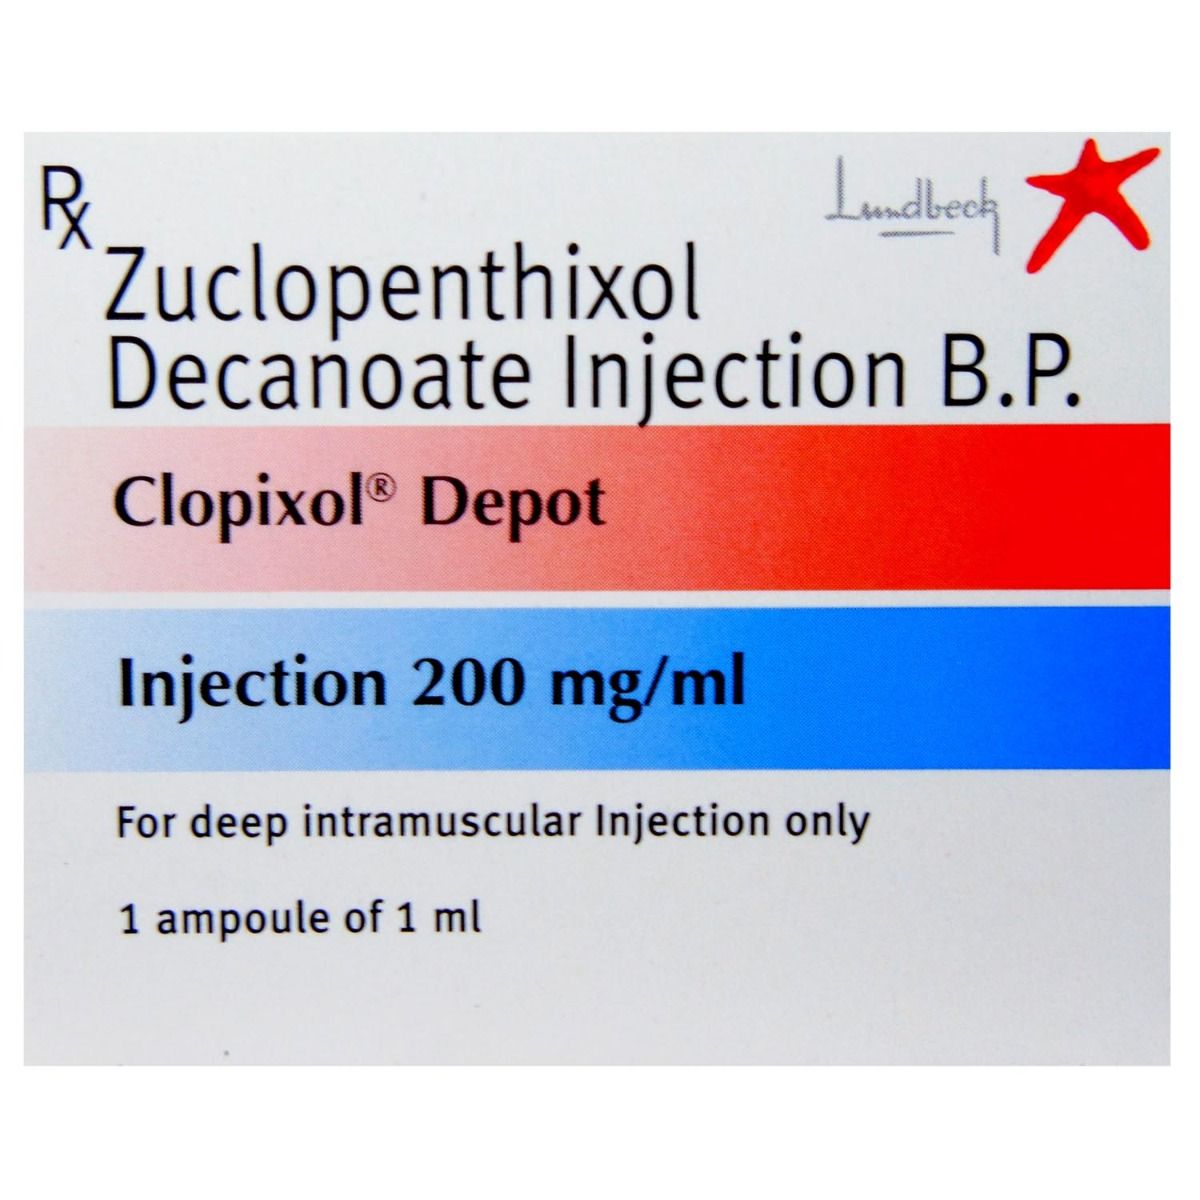 Buy Clopixol Depot Injection 1 ml Online